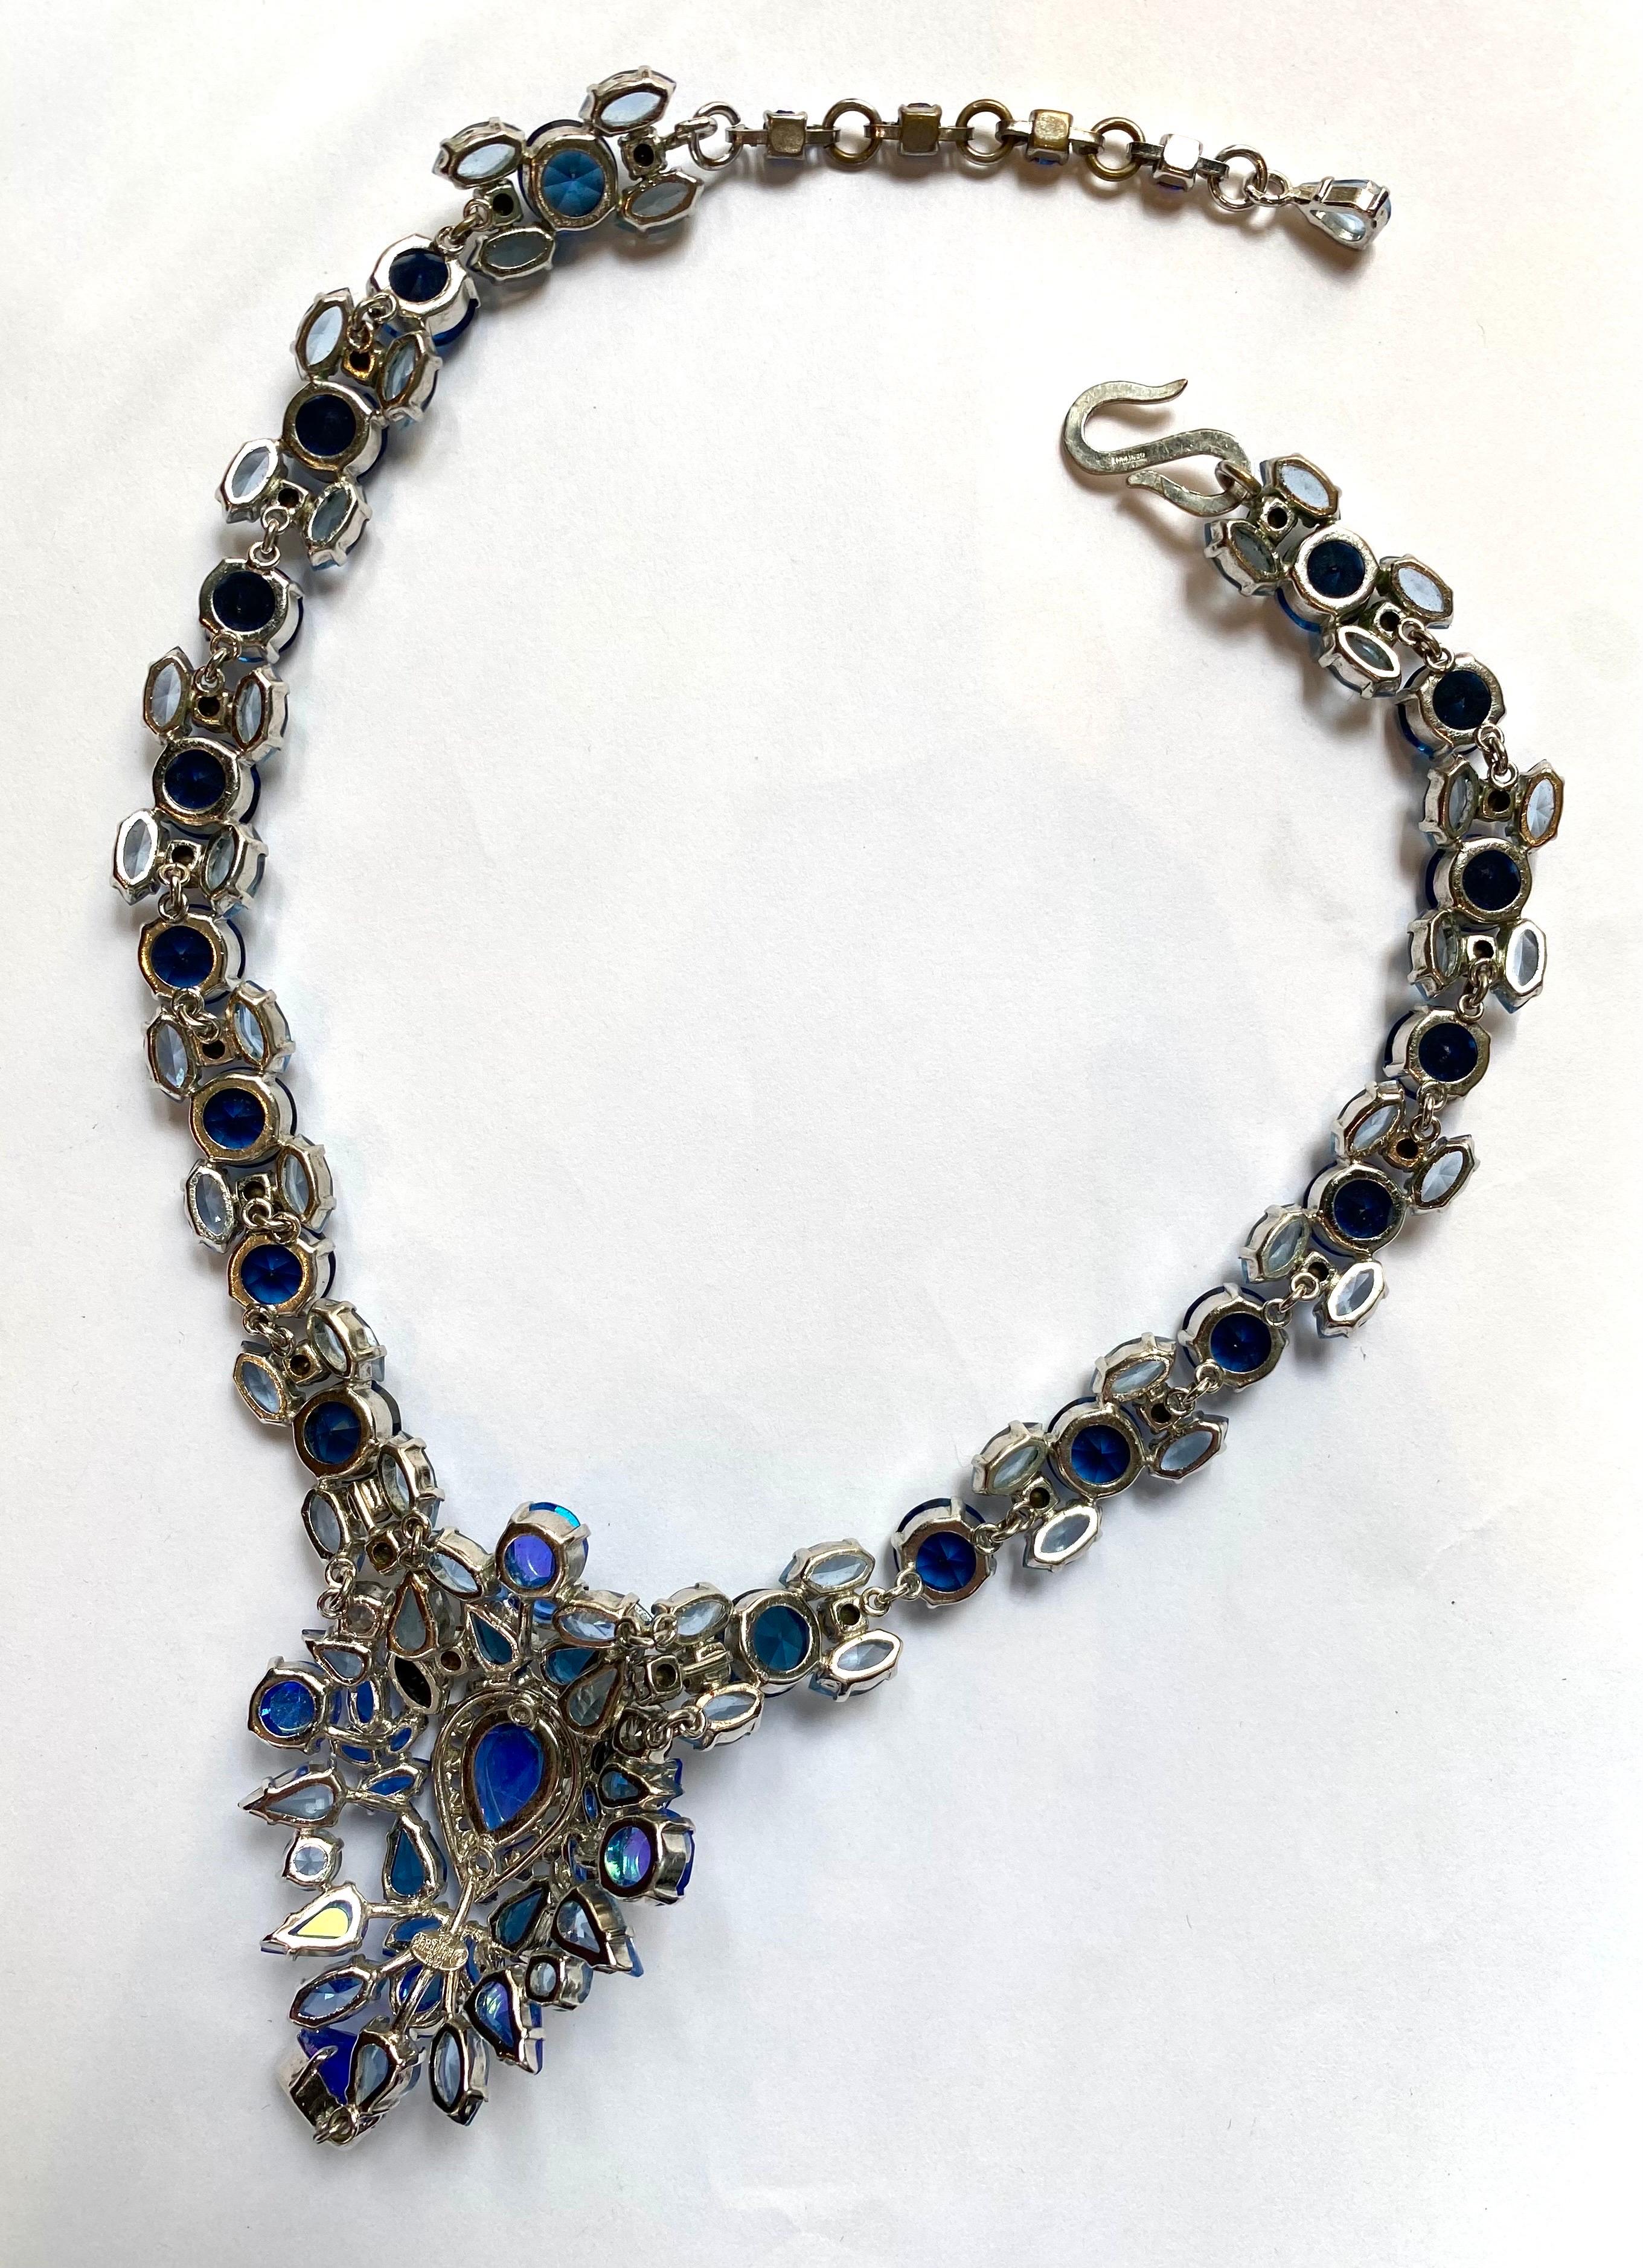 Brilliant Cut Christian Dior 1959 Shades of Blue Rhinestone Necklace by Henkel & Grosse'